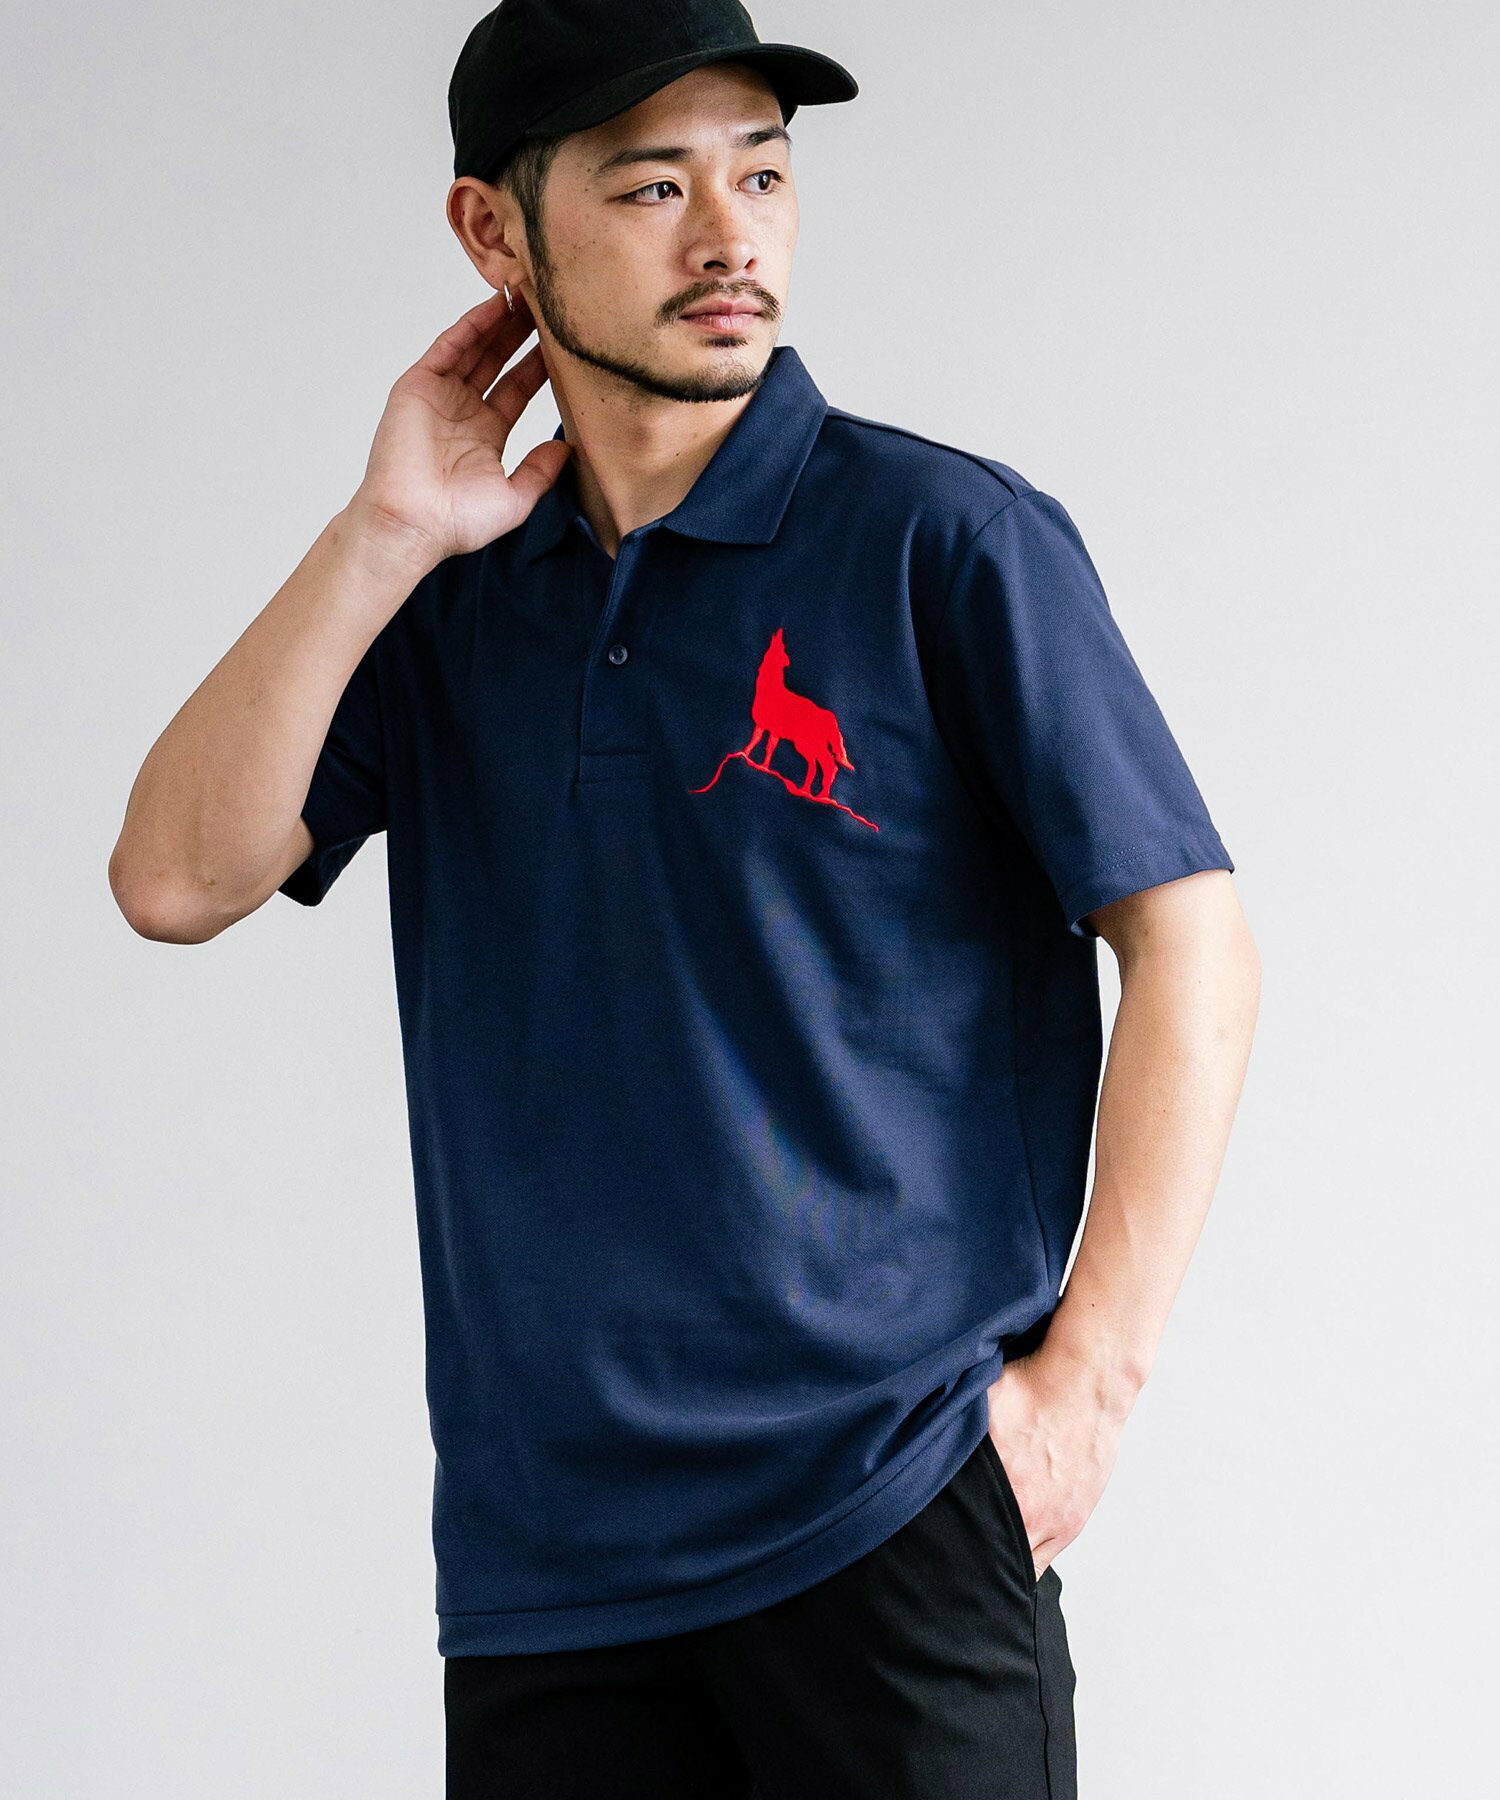 Healthknit Product/ヘルスニットプロダクト ワンポイント刺繍ロゴ半袖ポロシャツ